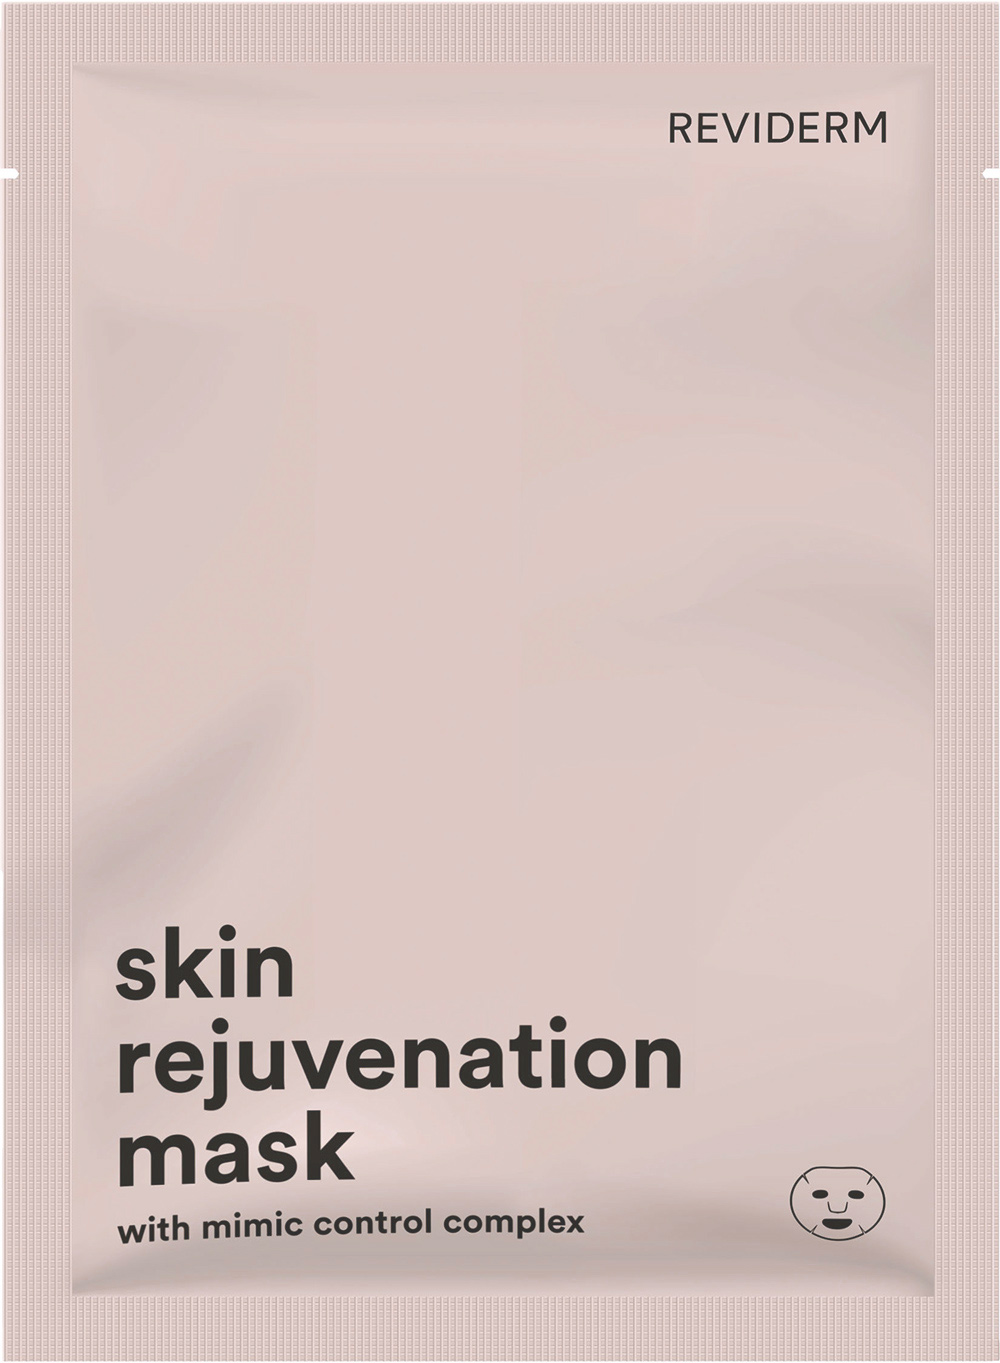 REVIDERM - skin rejuvenation mask